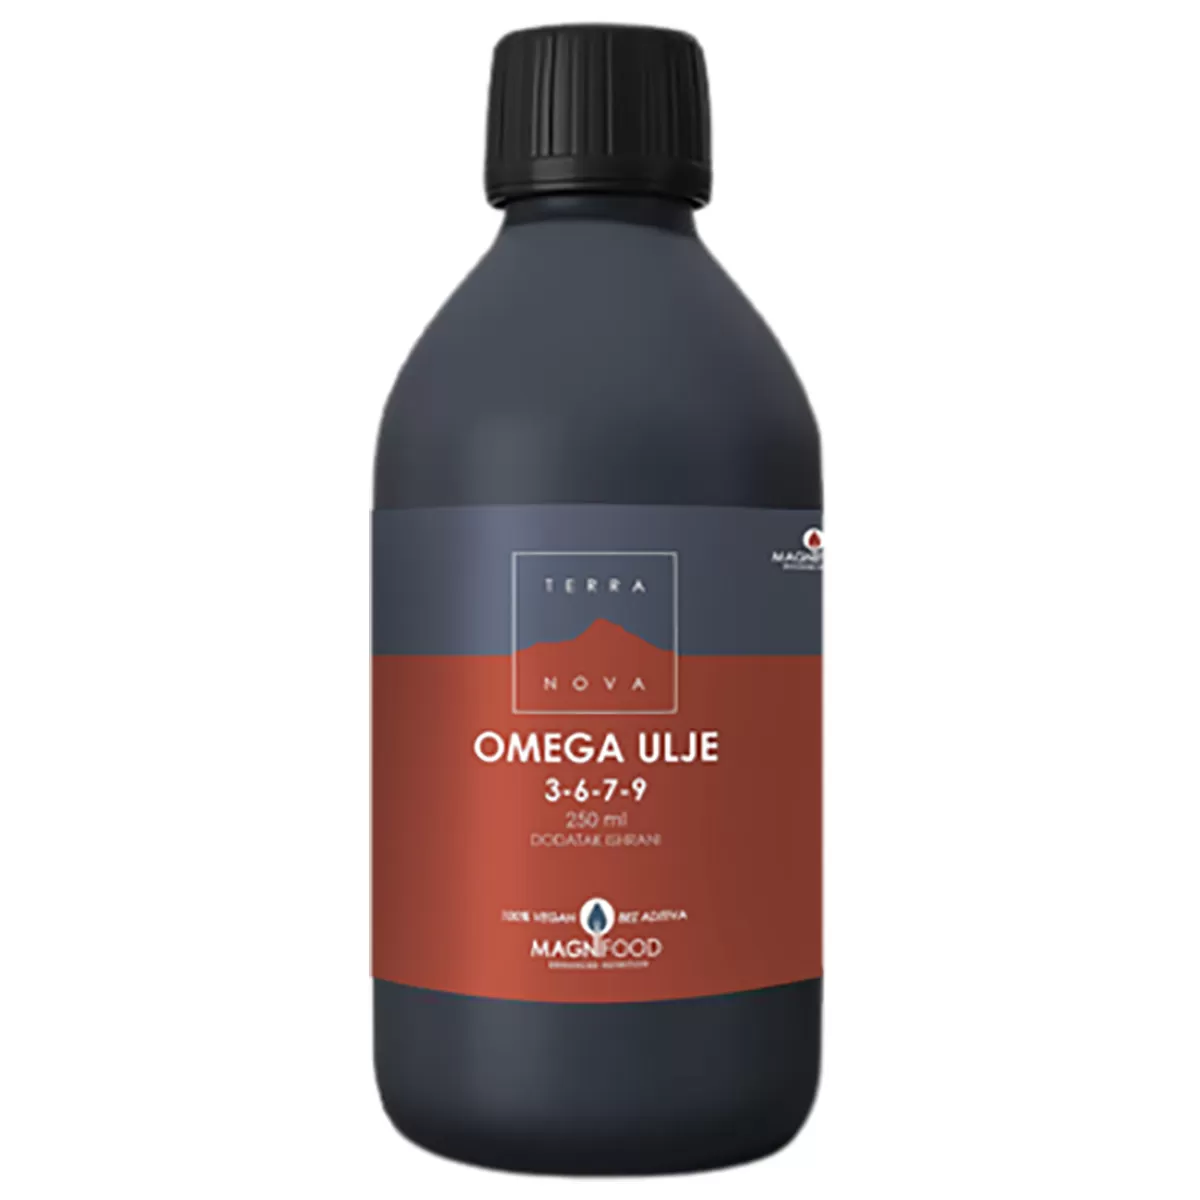 Terranova Omega ulje 3-6-7-9 250ml 